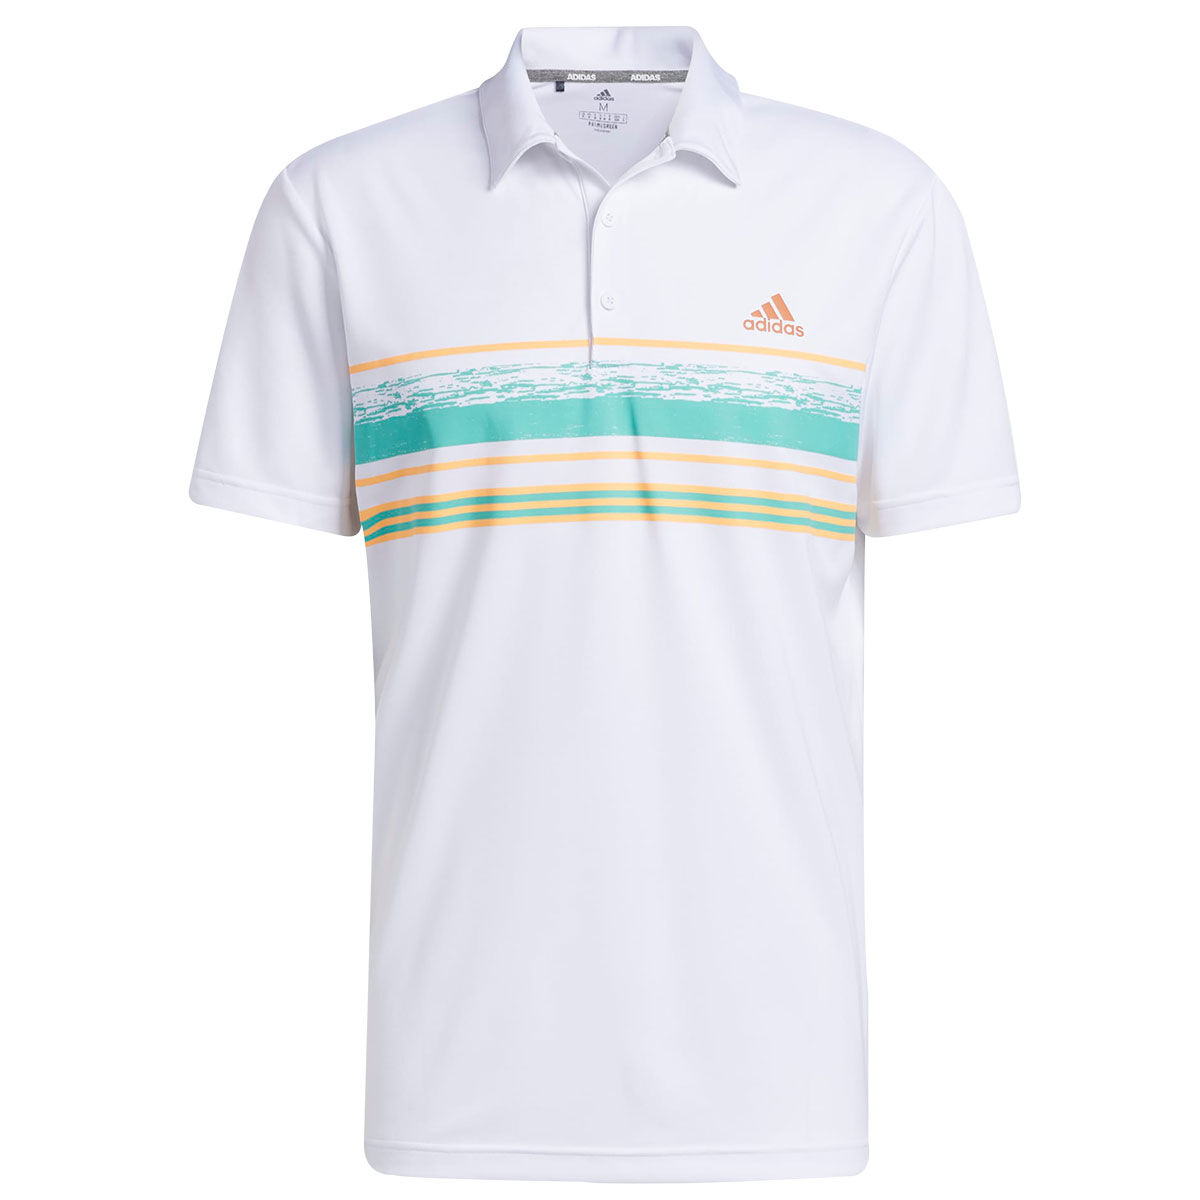 Polo adidas Golf Core Novelty Stripe, homme, Petit, White/acid mint | Online Golf